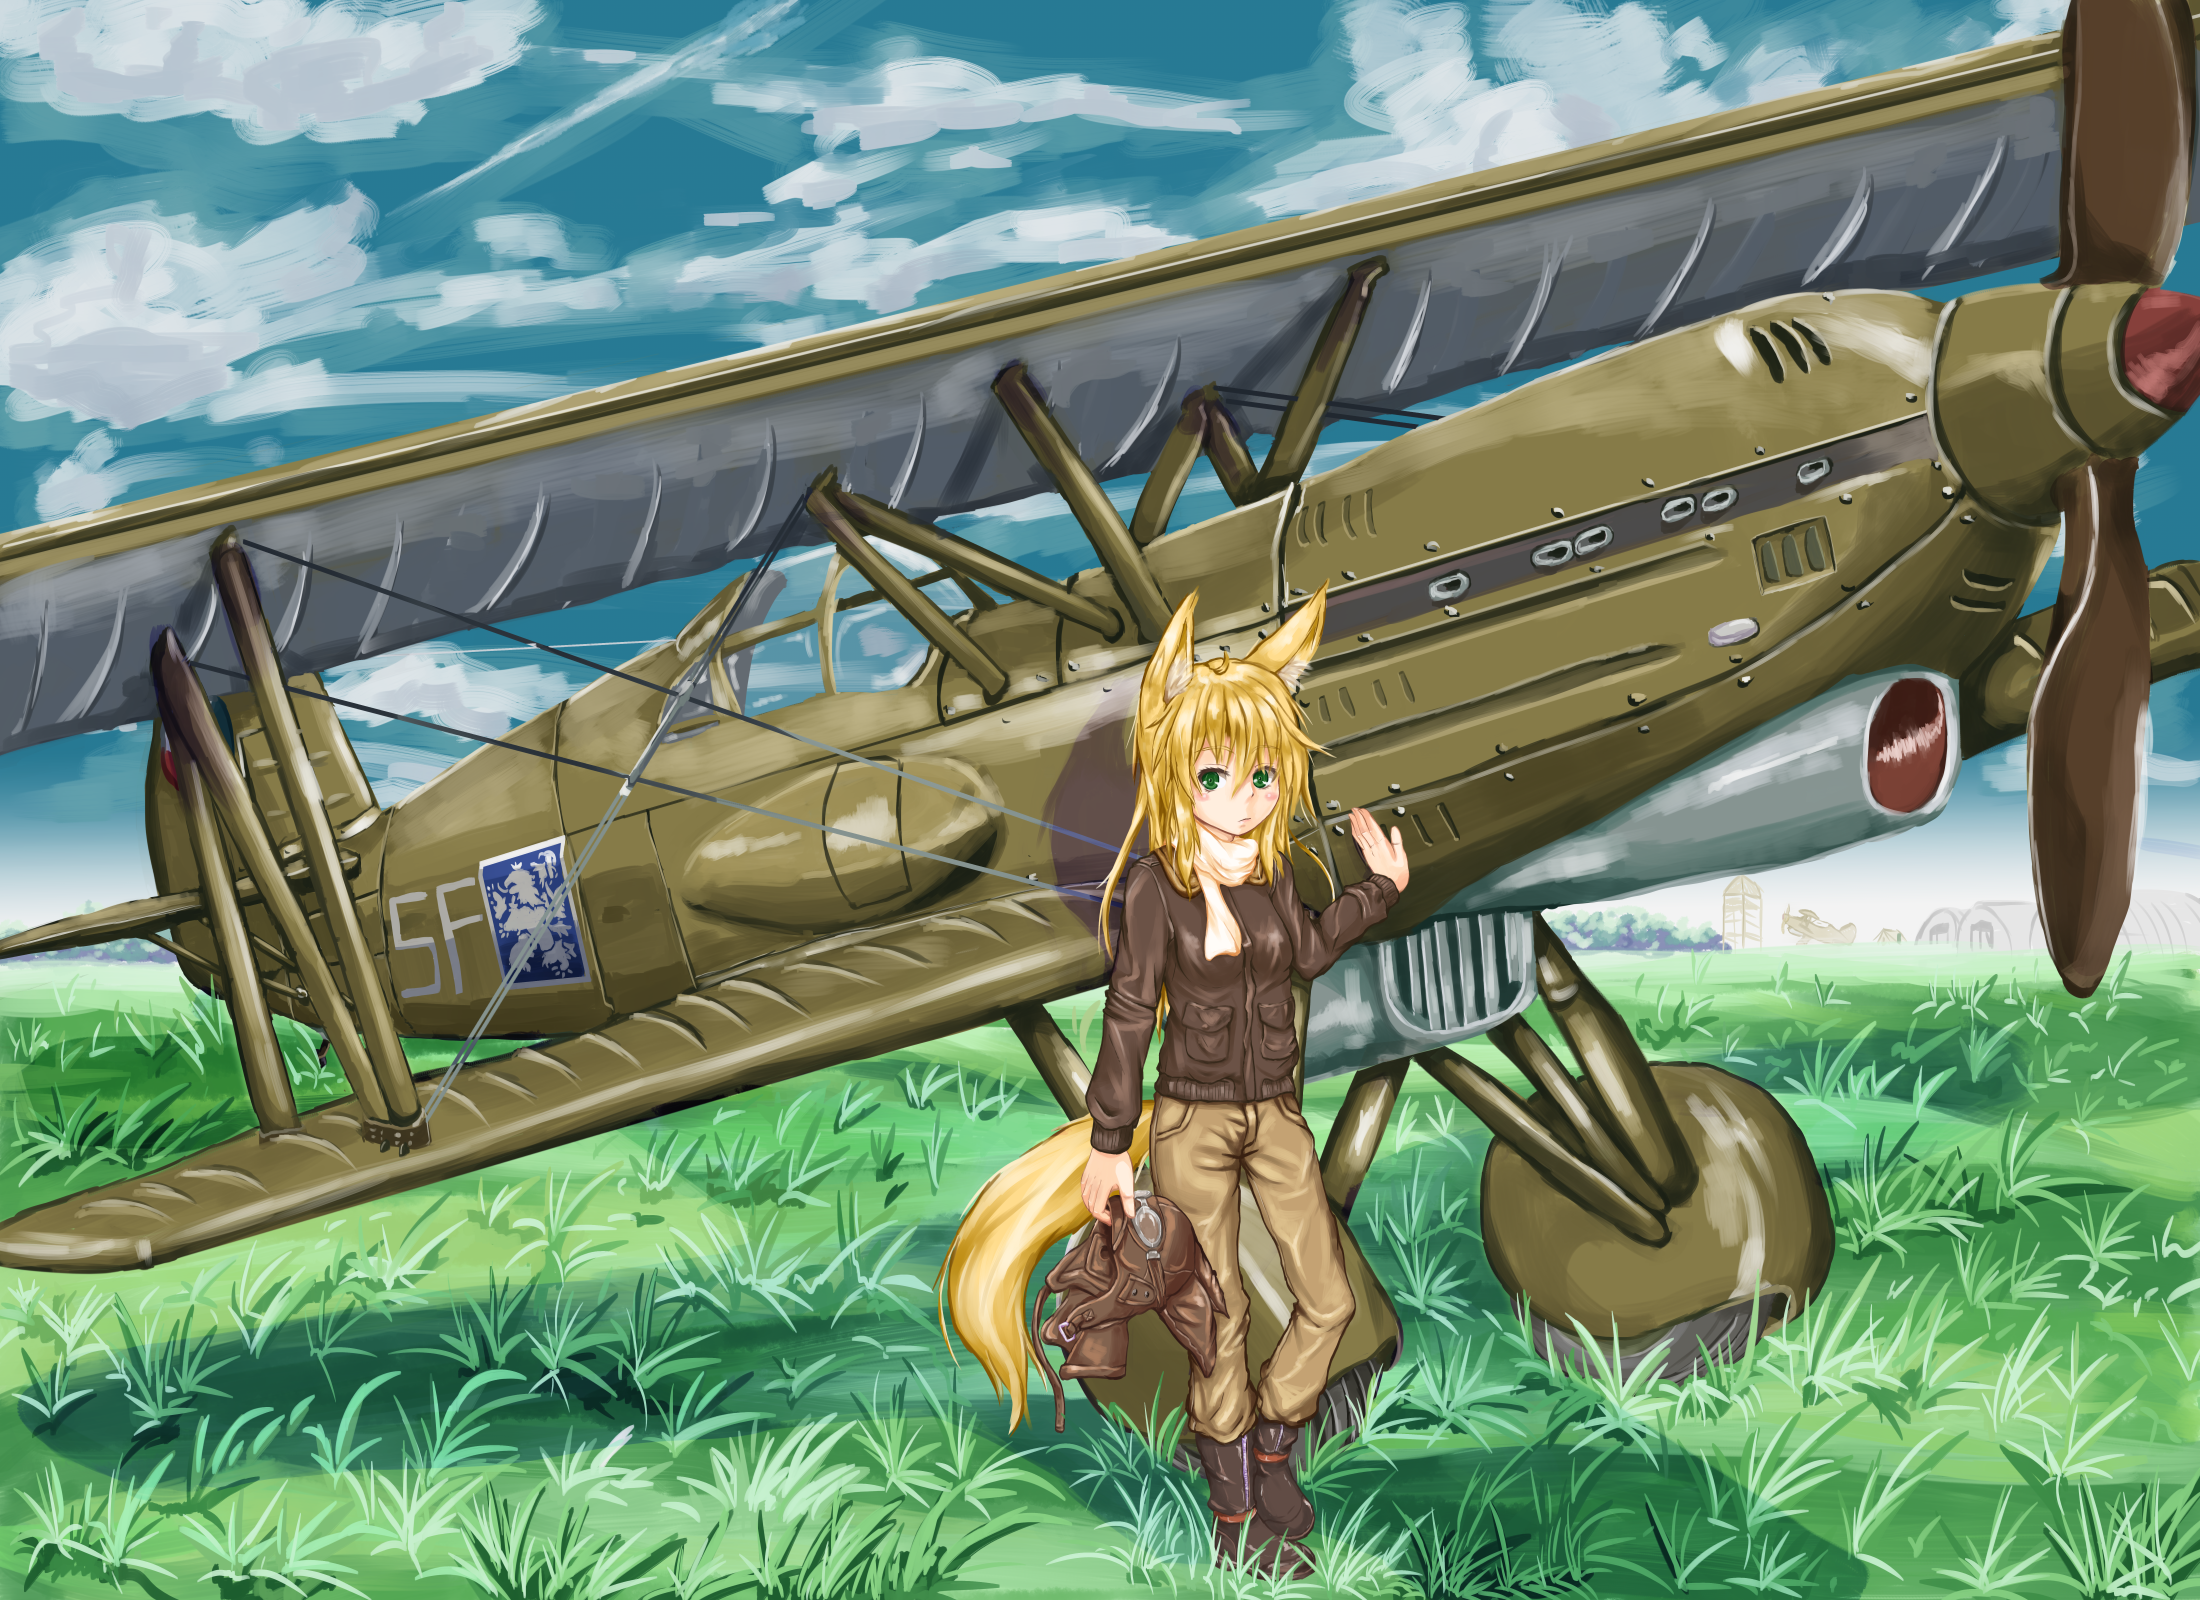 Anime Anime Girls Kitsunemimi Aircraft Blonde Long Hair Animal Ears Grass Sky Clouds Airplane Jacket 2200x1600